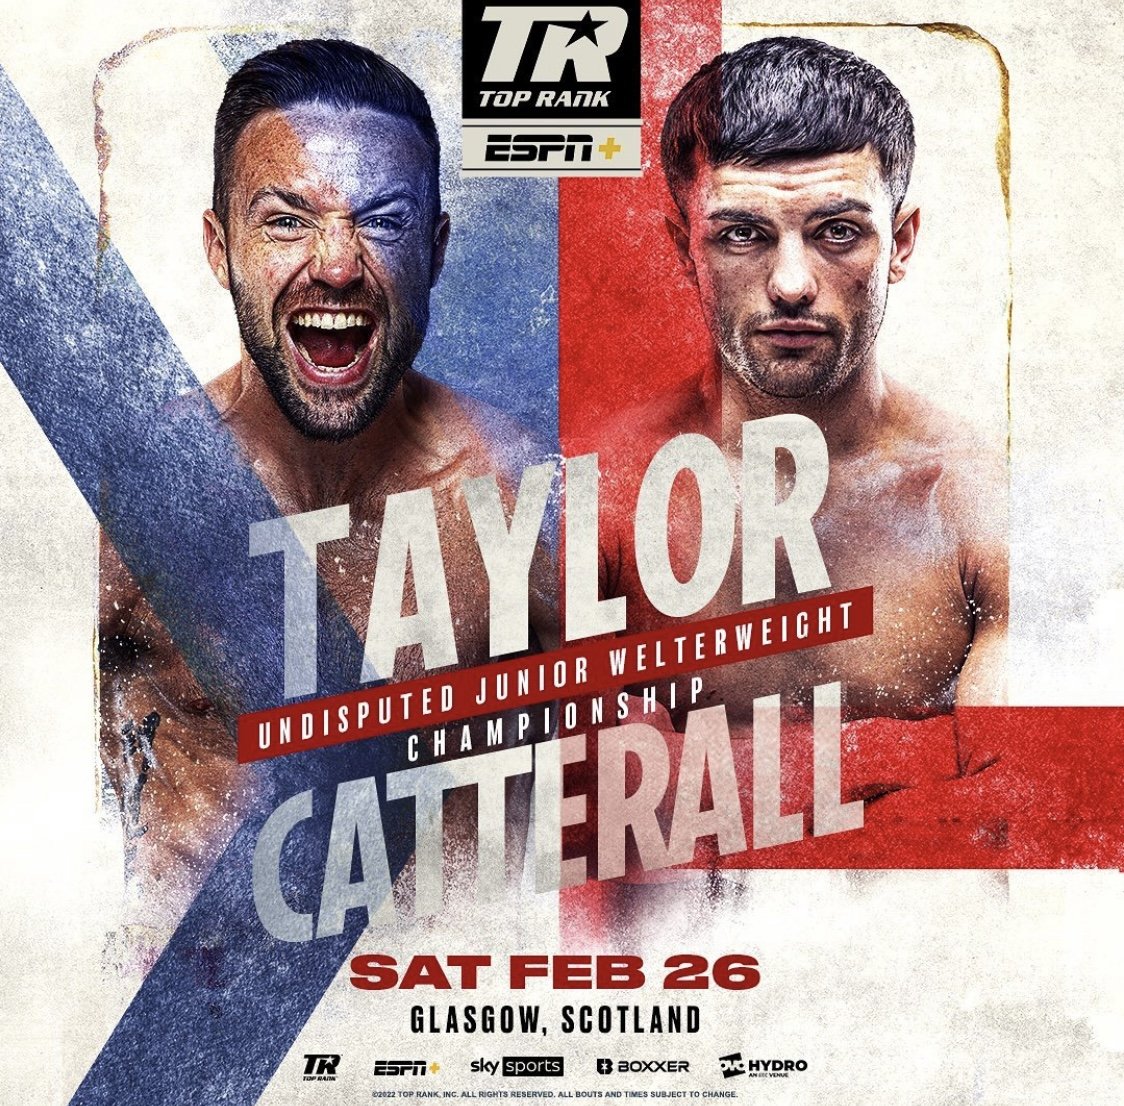 https://suljosblog.com/suljos/wp-content/uploads/2022/01/Taylor-vs-Catterall-Fight.jpg